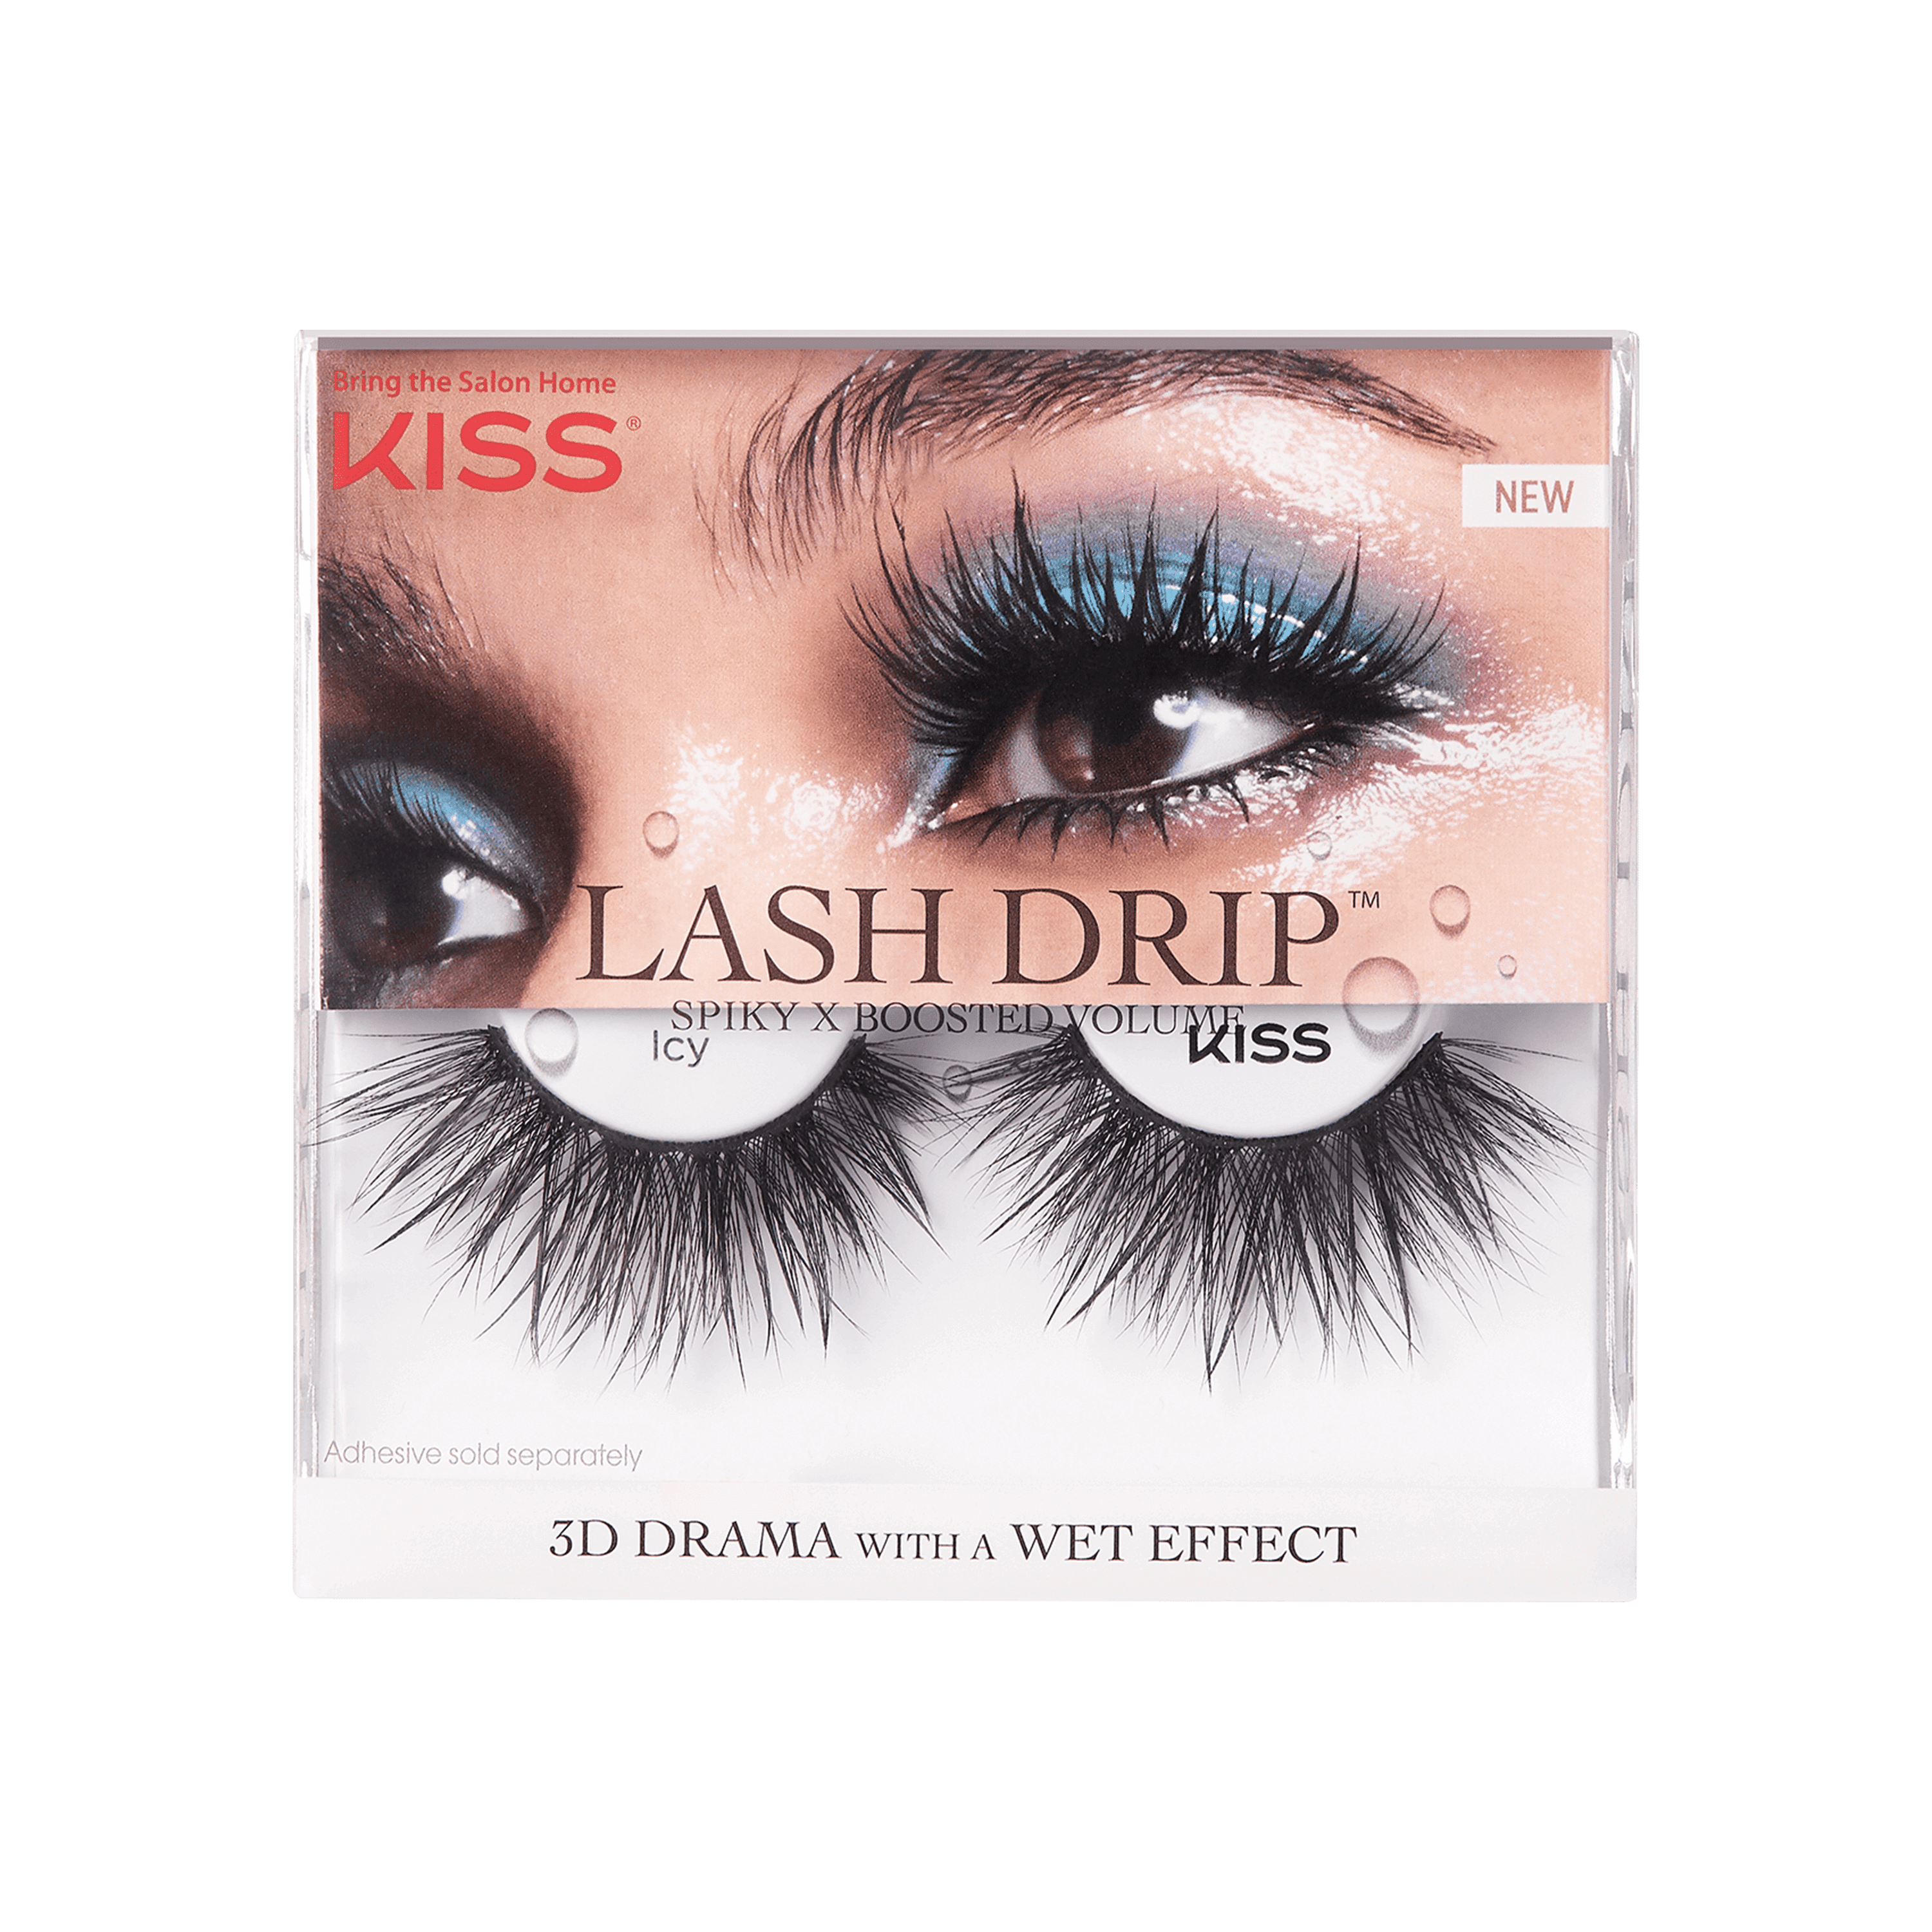 KISS Lash Drip Spiky X Boosted Volume Fake Eyelashes, ‘Icy’, 1 Pair